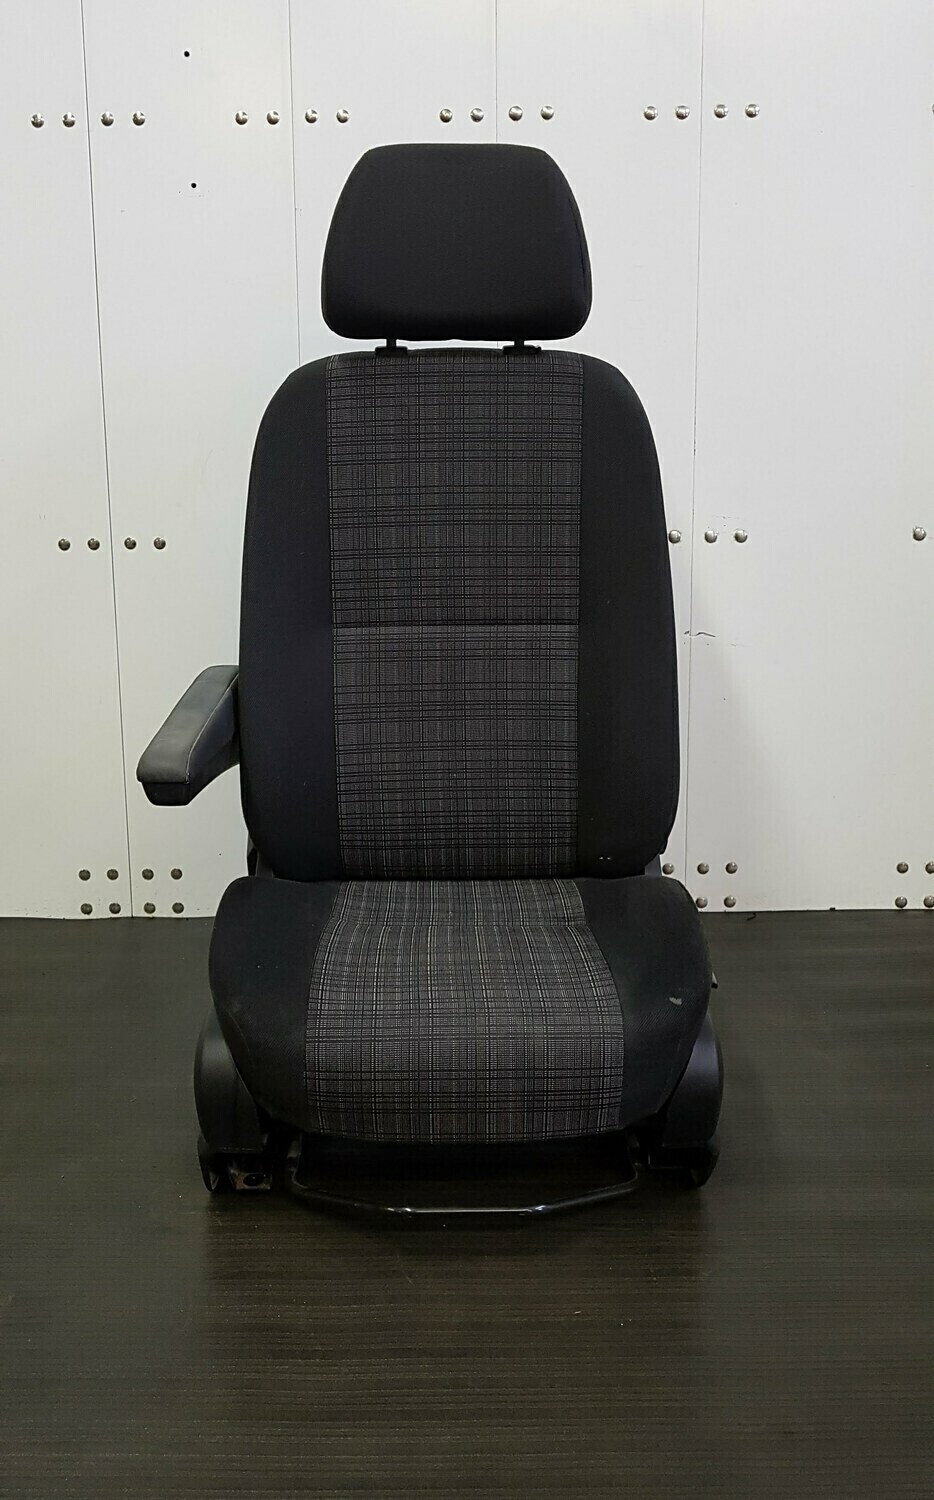 Mercedes Sprinter Driver Seat W/O Base